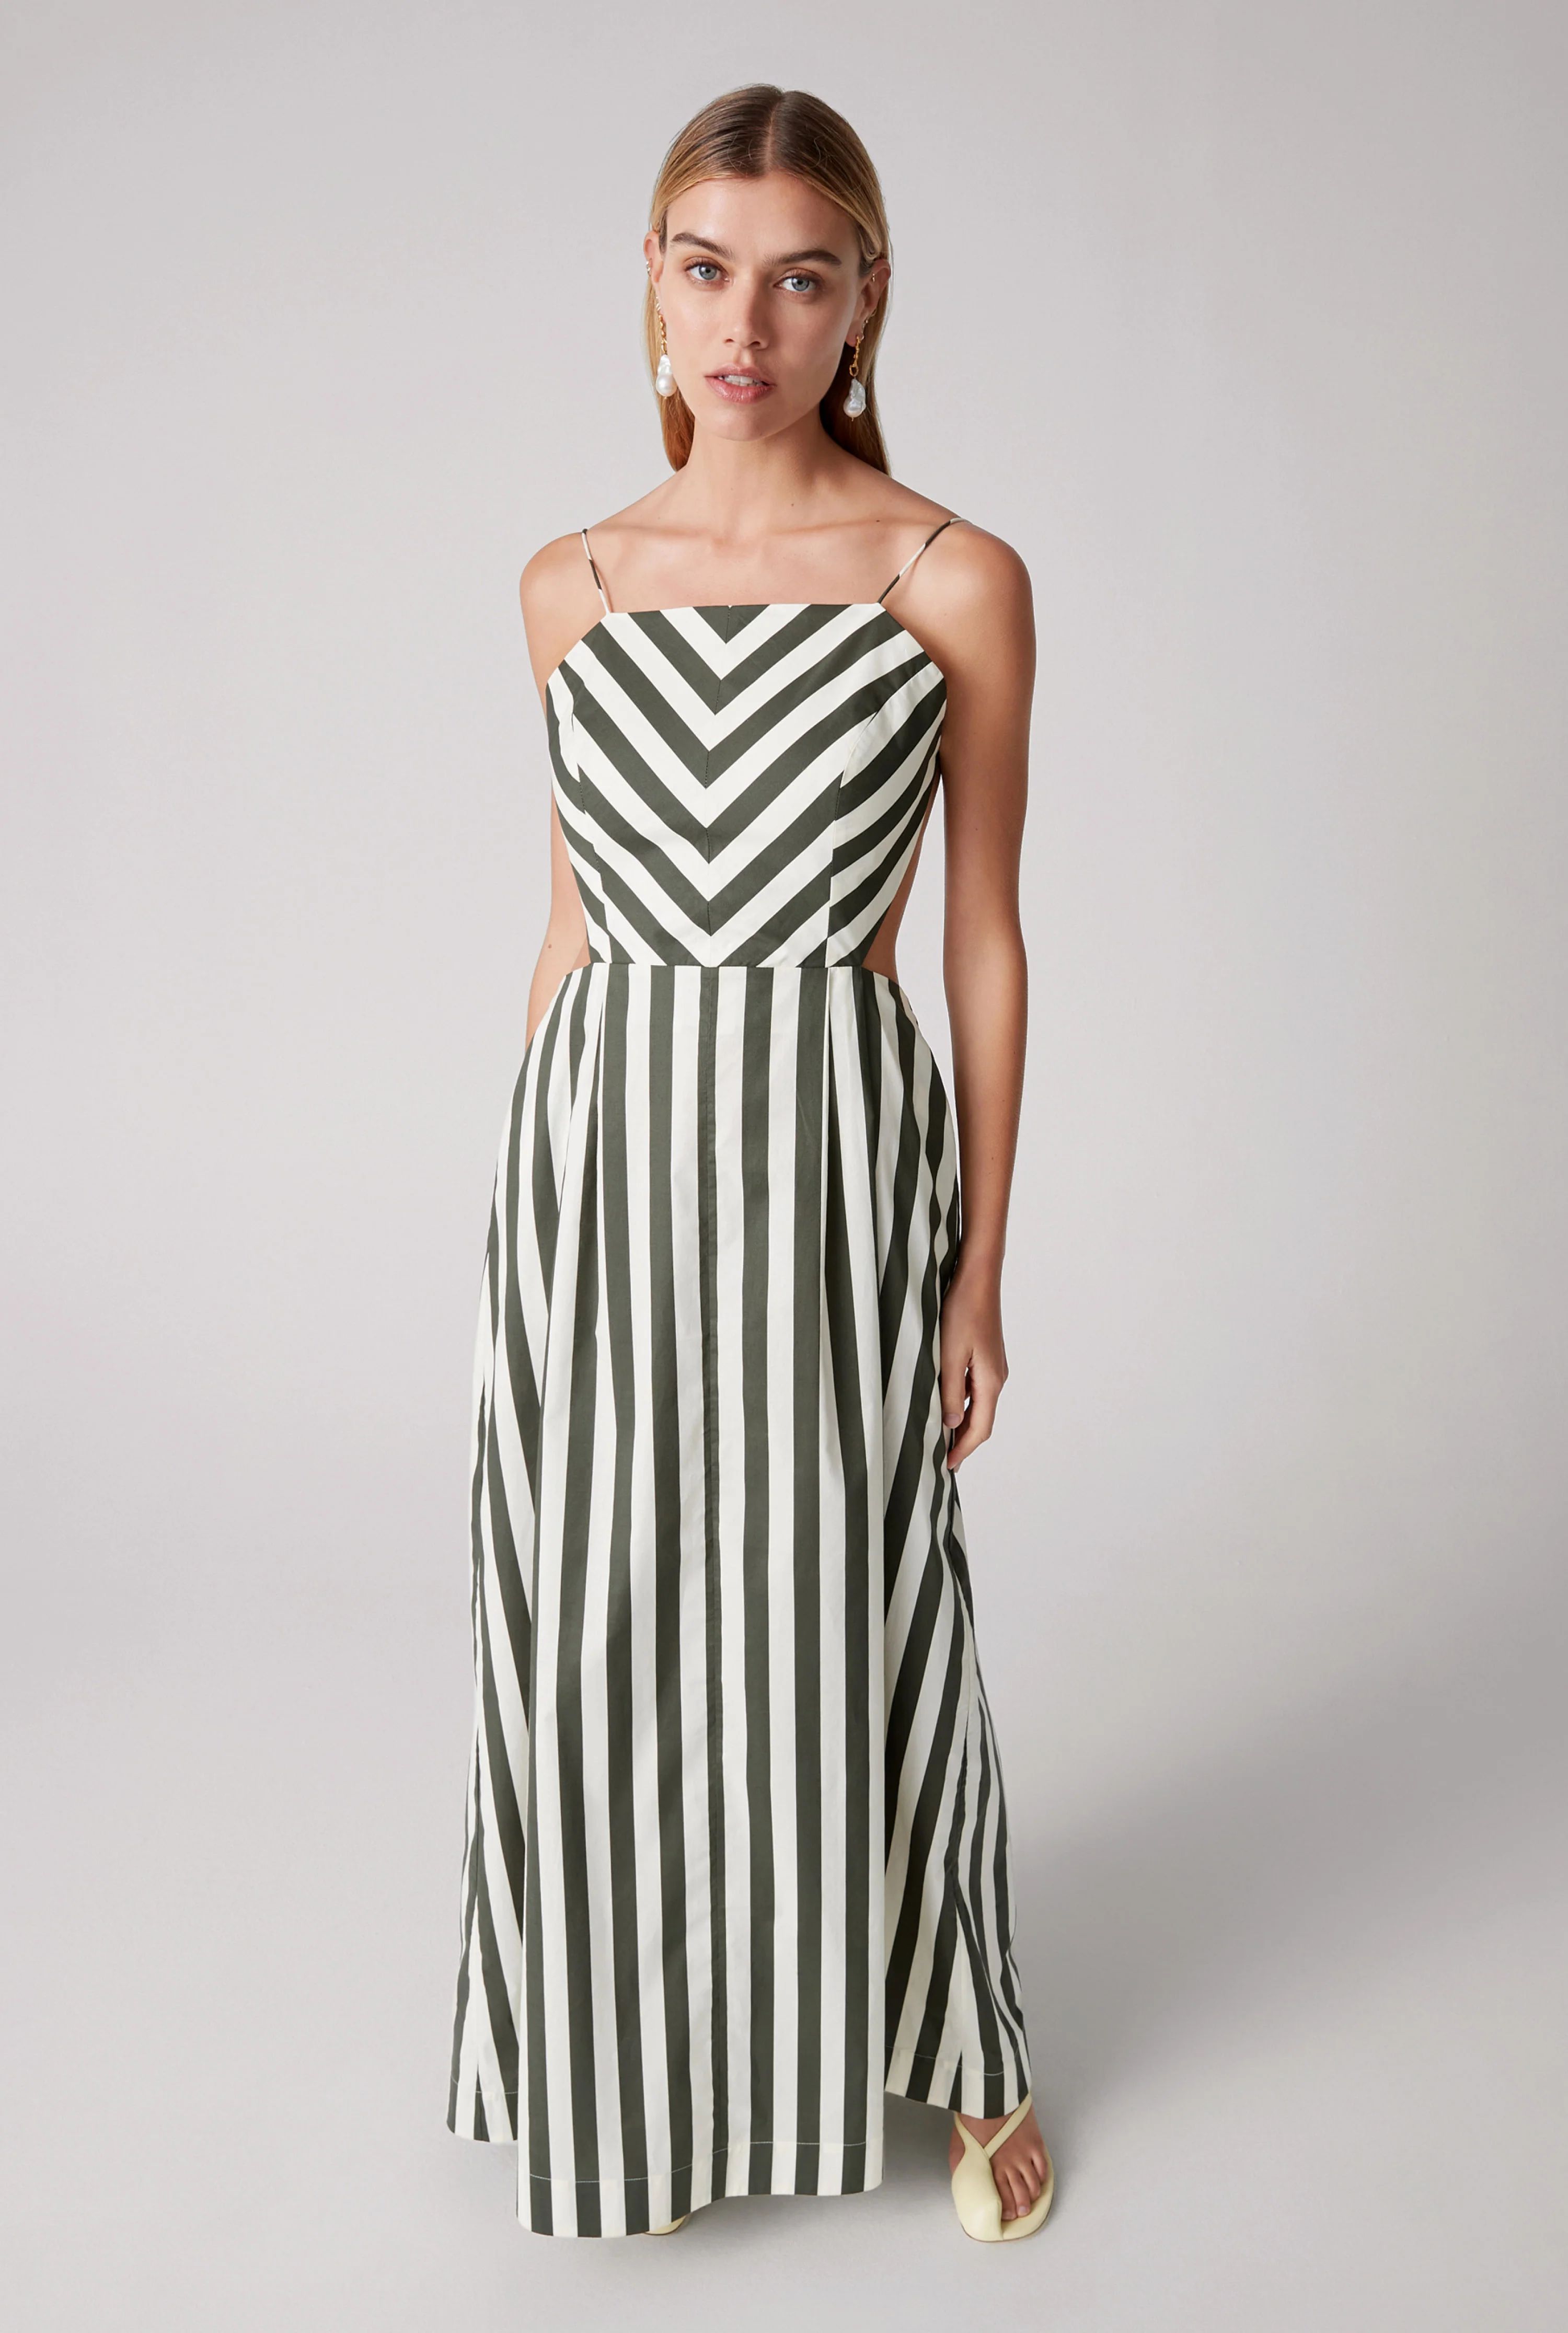 Backless Apron Maxi Dress in Forest Green Stripe | Venroy | Premium Leisurewear designed in Austr... | Venroy AU